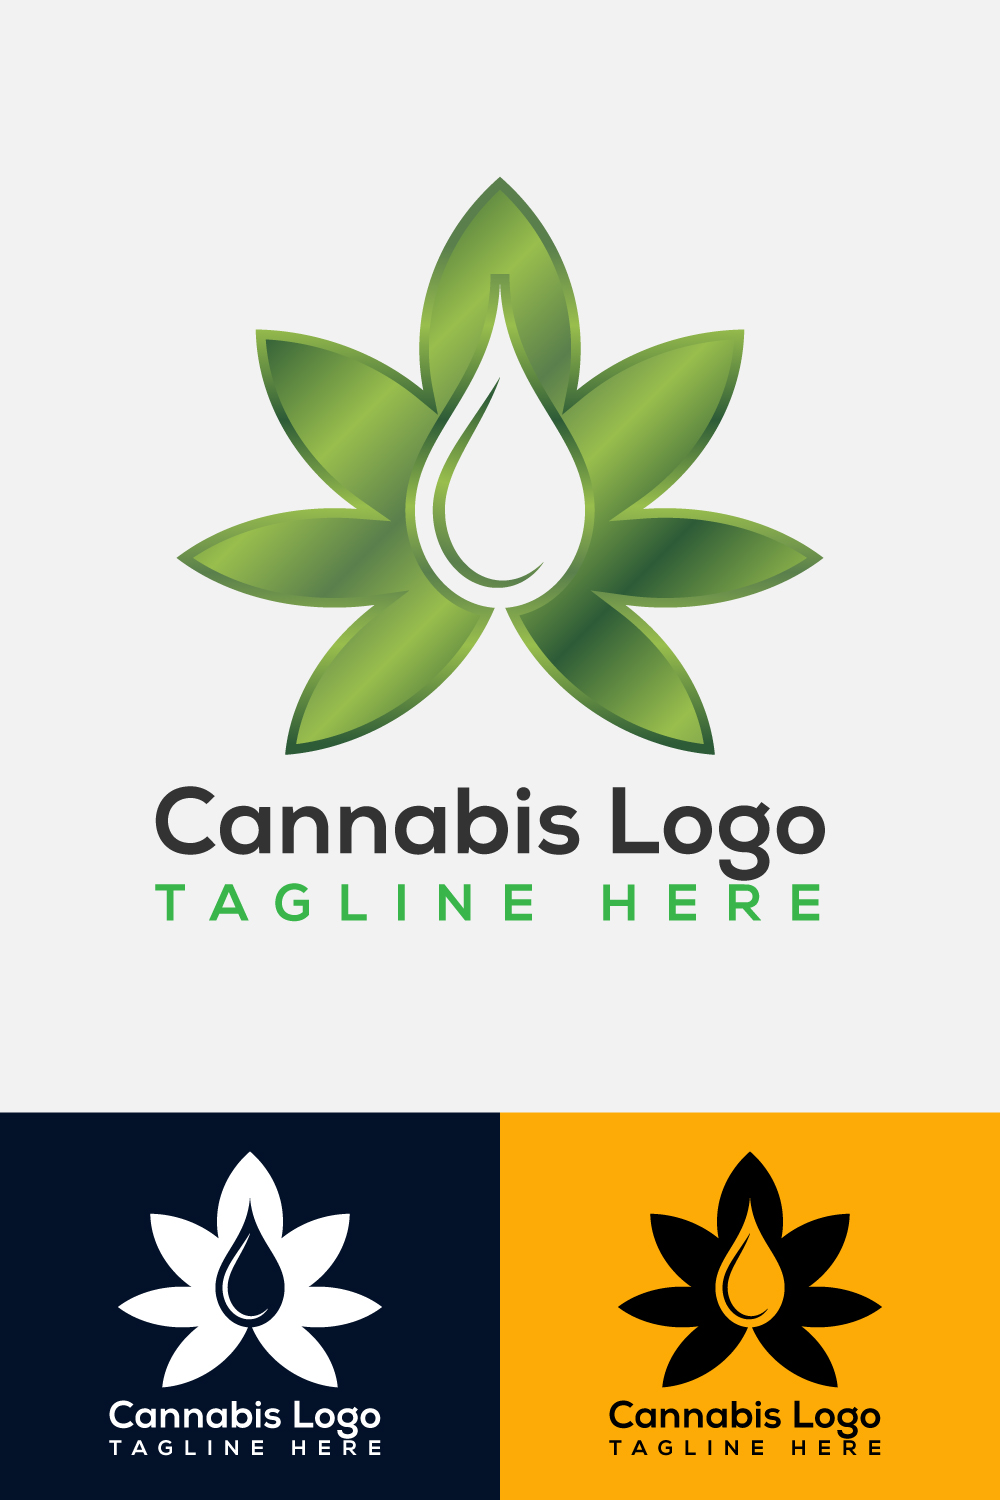 Cannabis Vector Logo Design Template Pinterest image.